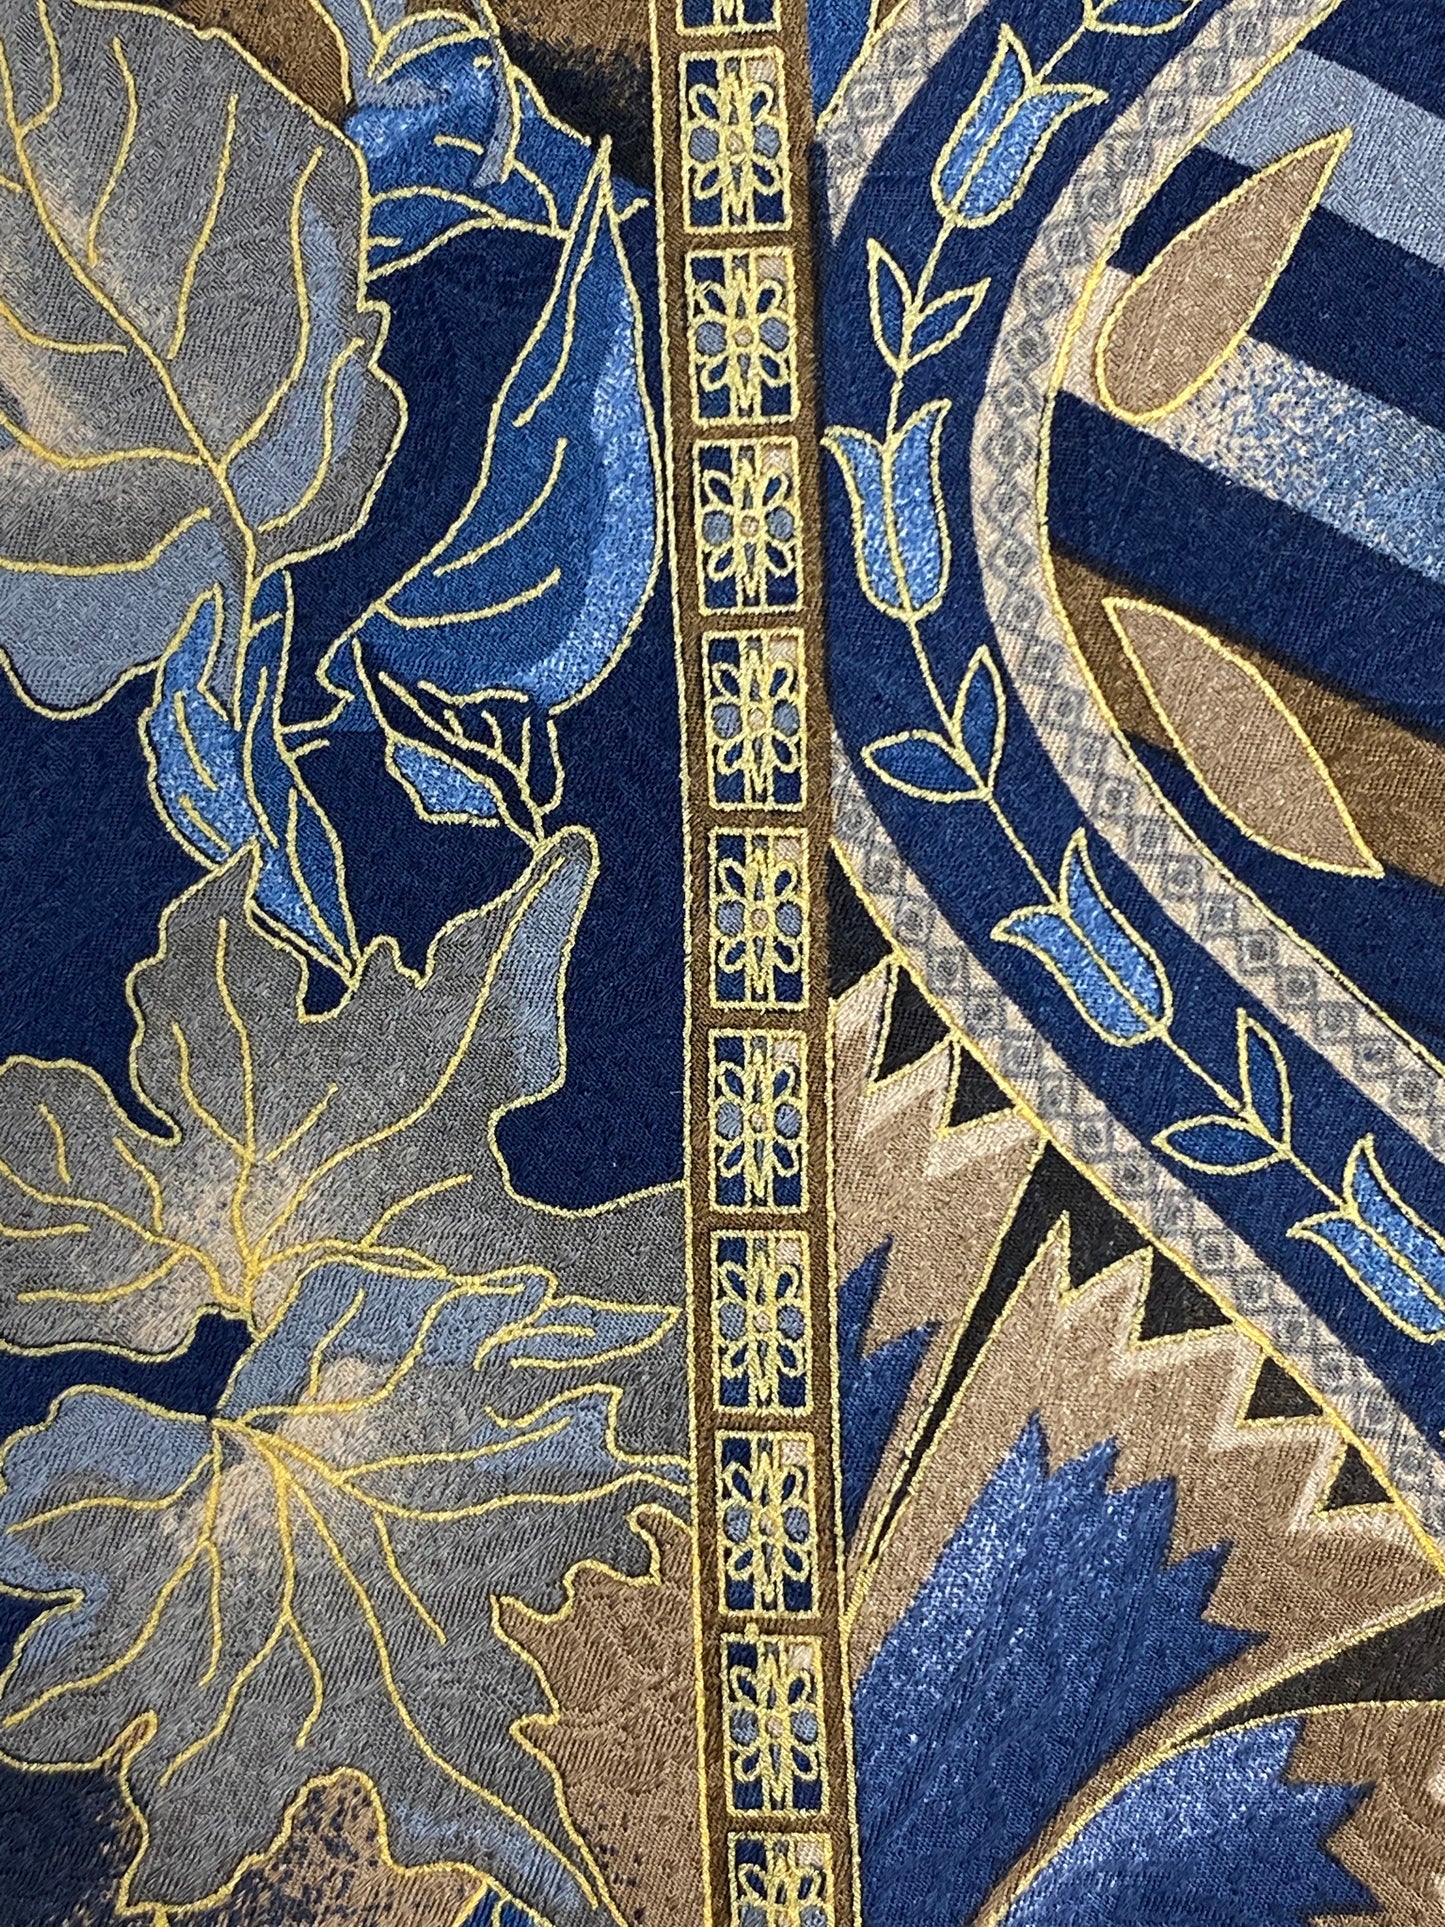 Close-up of: 90s Deadstock Silk Necktie, Men's Vintage Blue/Taupe Oriental Foliage Pattern Tie, NOS